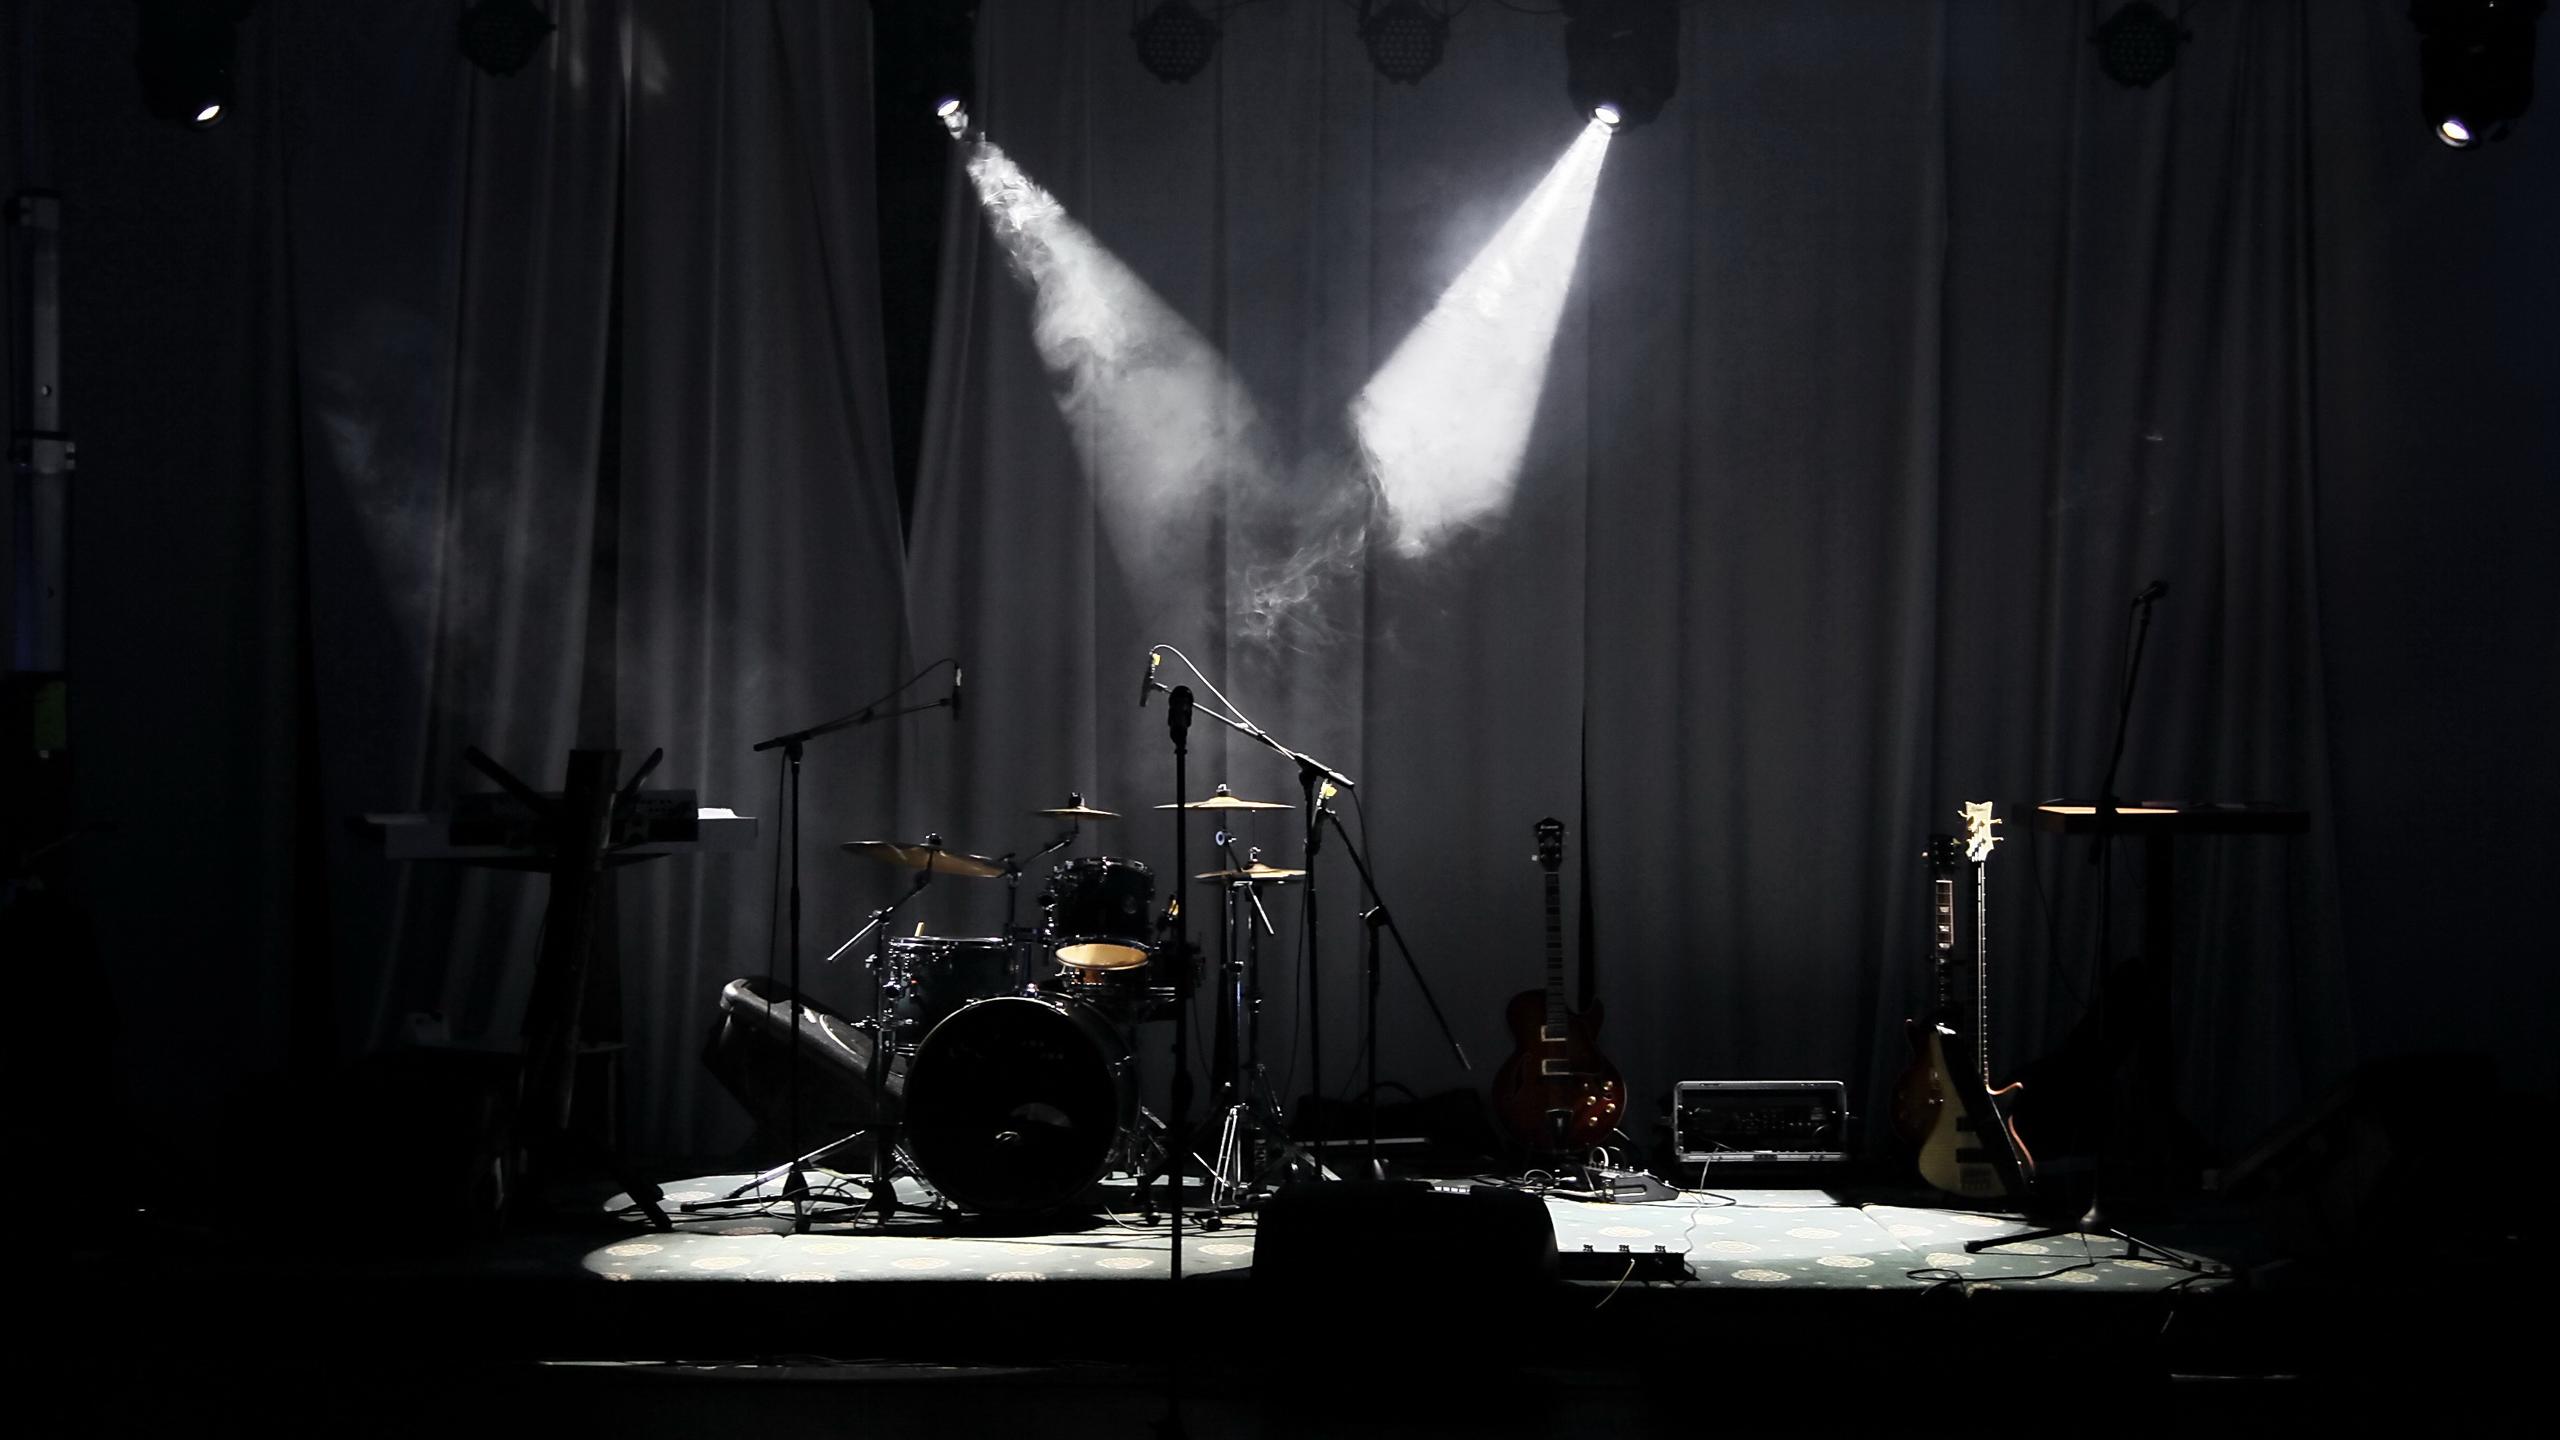 Scene музыка. Рок-сцена. Сцена рок концерта. Пустая сцена рок концерта. Музыкальные инструменты на сцене.